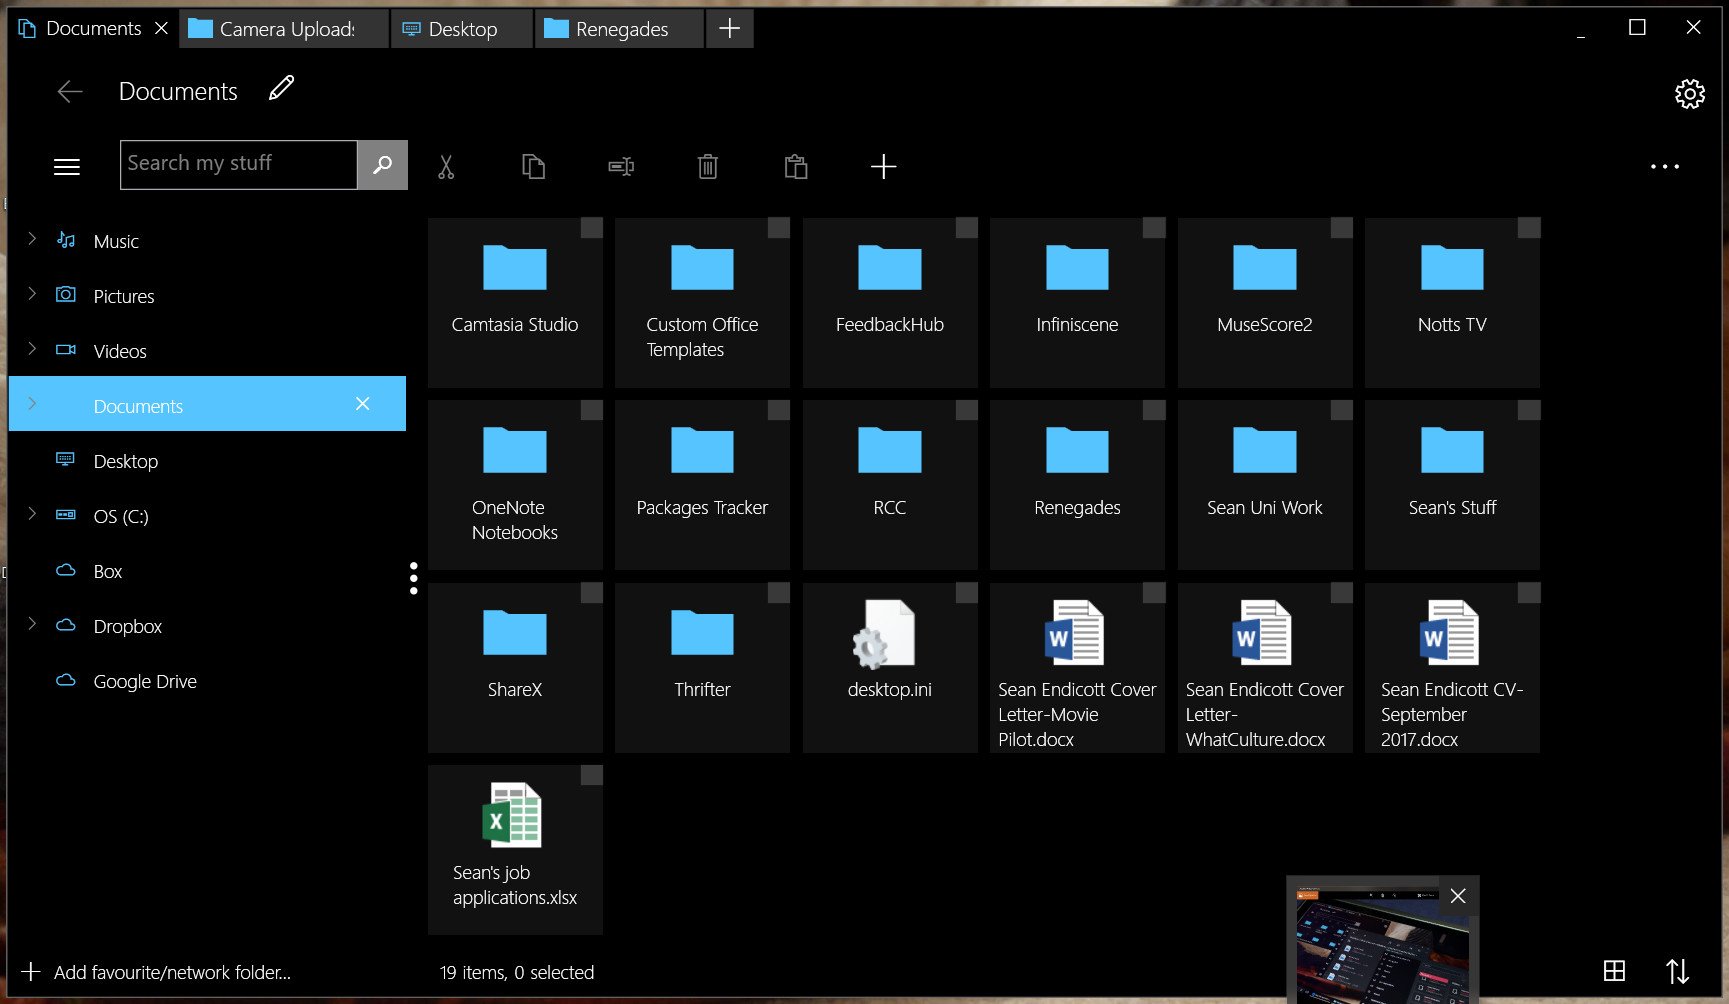 file explorer windows 10 download